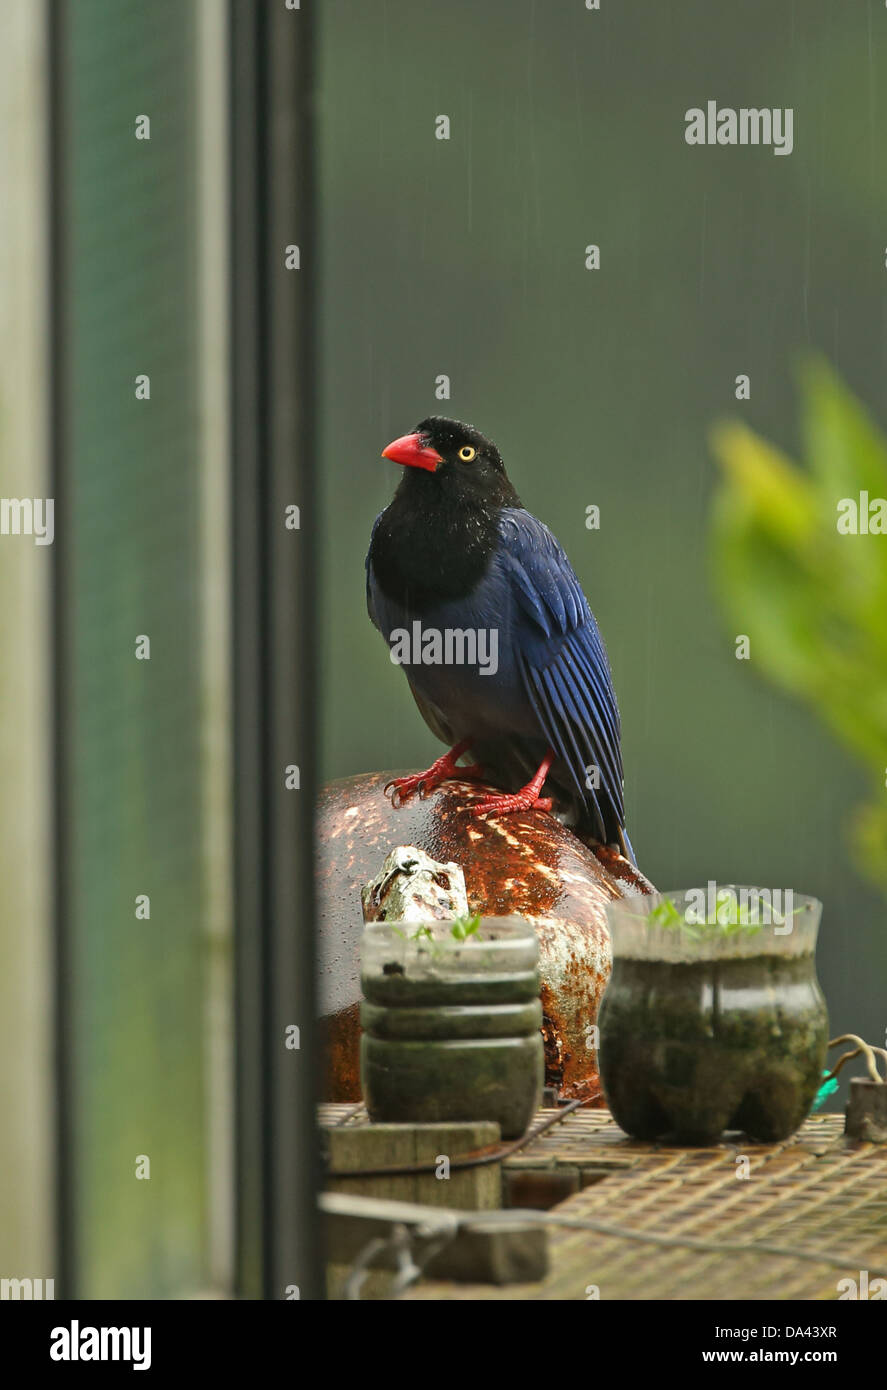 Taiwan Blue Magpie (Urocissa caerulea) adult, sheltering from rain on house balcony during rainfall, Taiwan, April Stock Photo